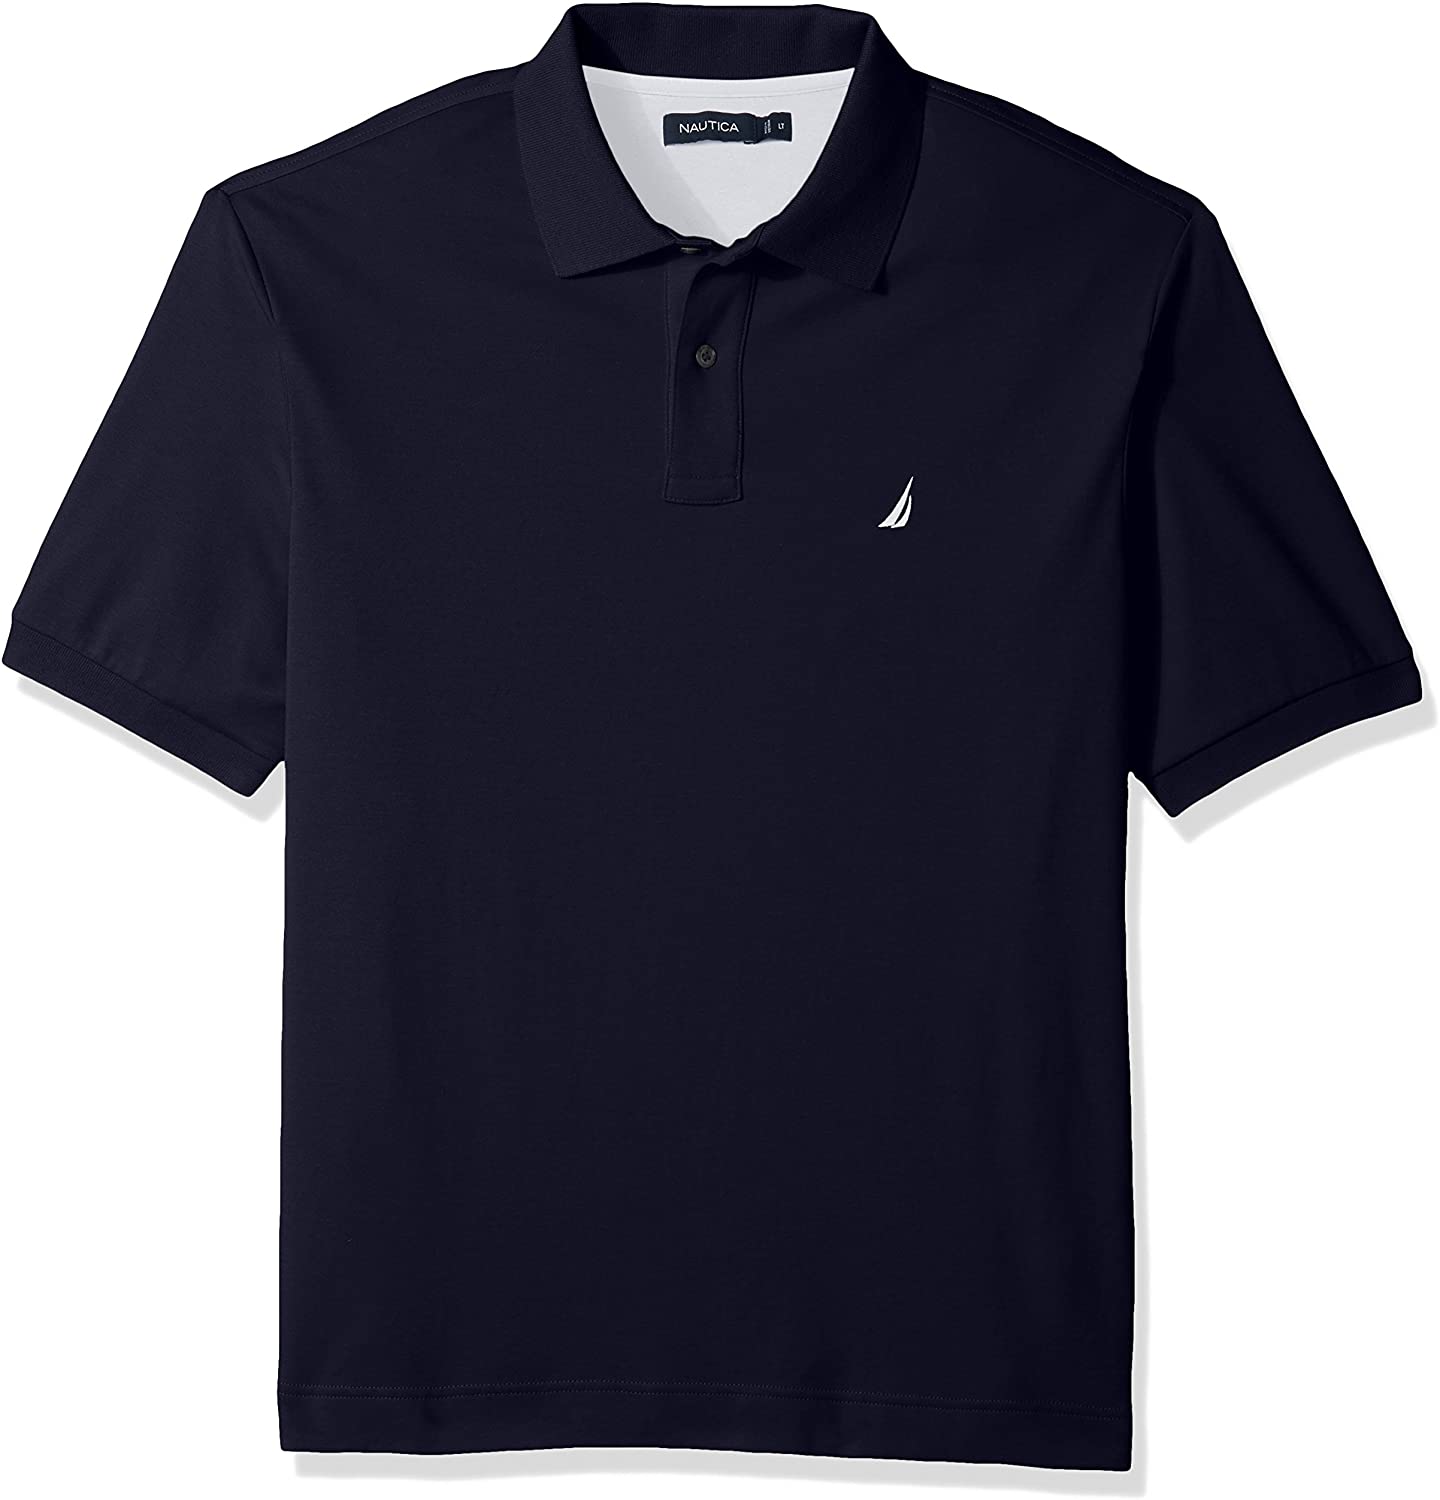 Nautica Mens Polo Shirt Gray Heathered Short Sleeve Slim Fit 100% Cotton XL  New